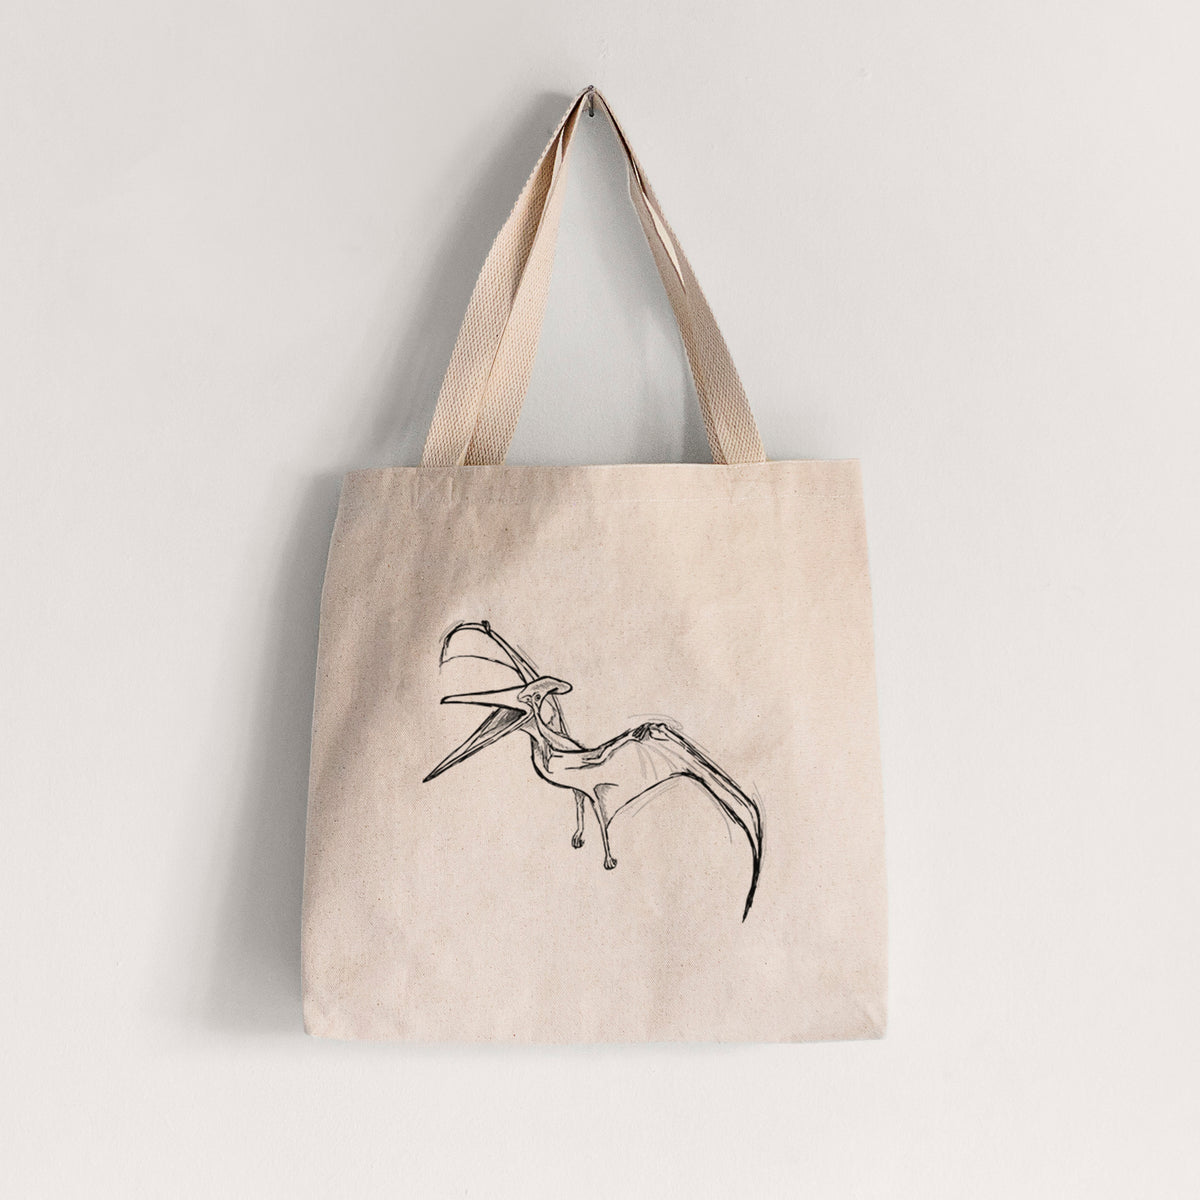 Pteranodon Longiceps - Tote Bag